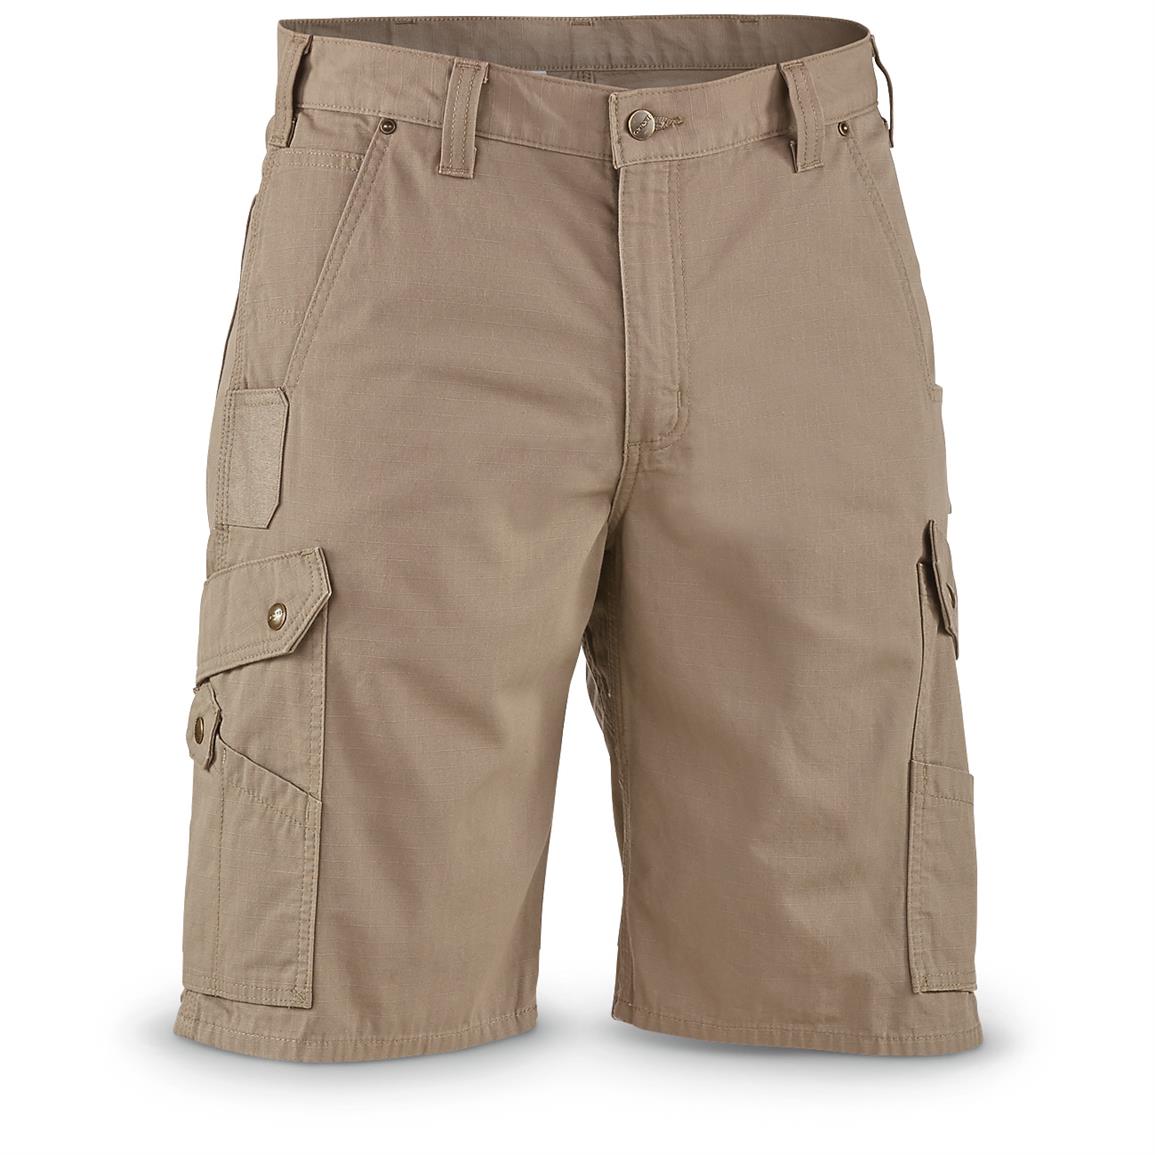 Carhartt Men's Cargo Work Shorts, Irregular - 665223, Shorts at ...